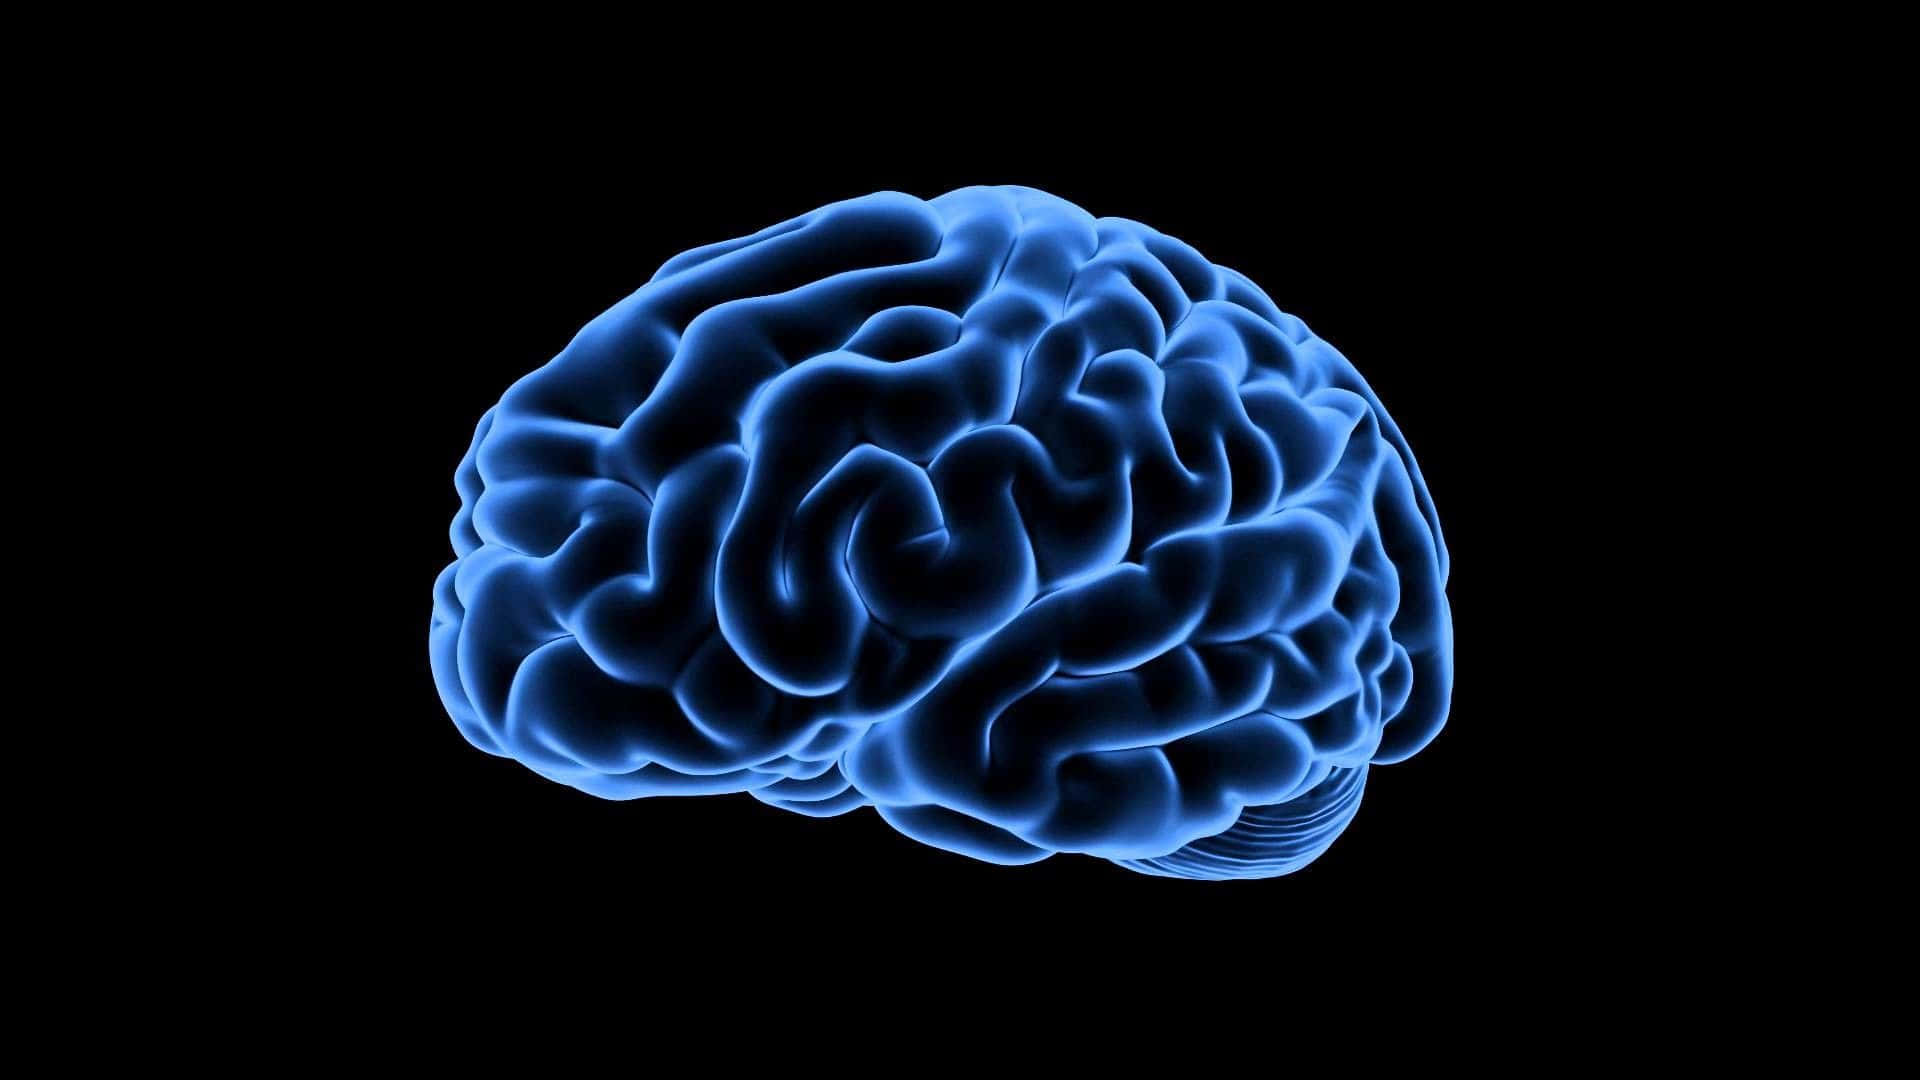 A Blue Human Brain On A Black Background Background